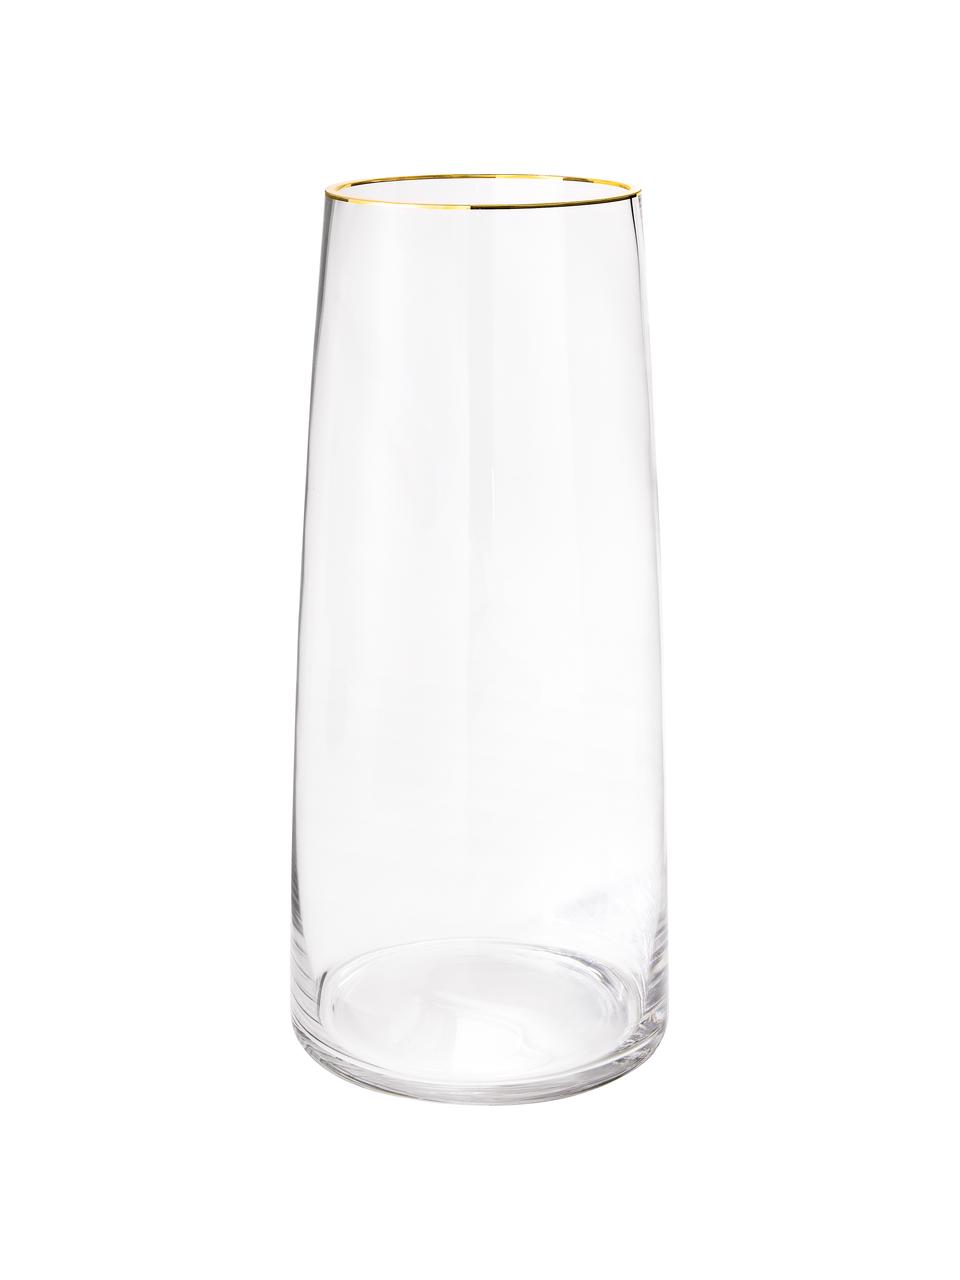 Vaso grande in vetro soffiato con bordo dorato Myla, Vetro, Trasparente, Ø 18 x Alt. 40 cm